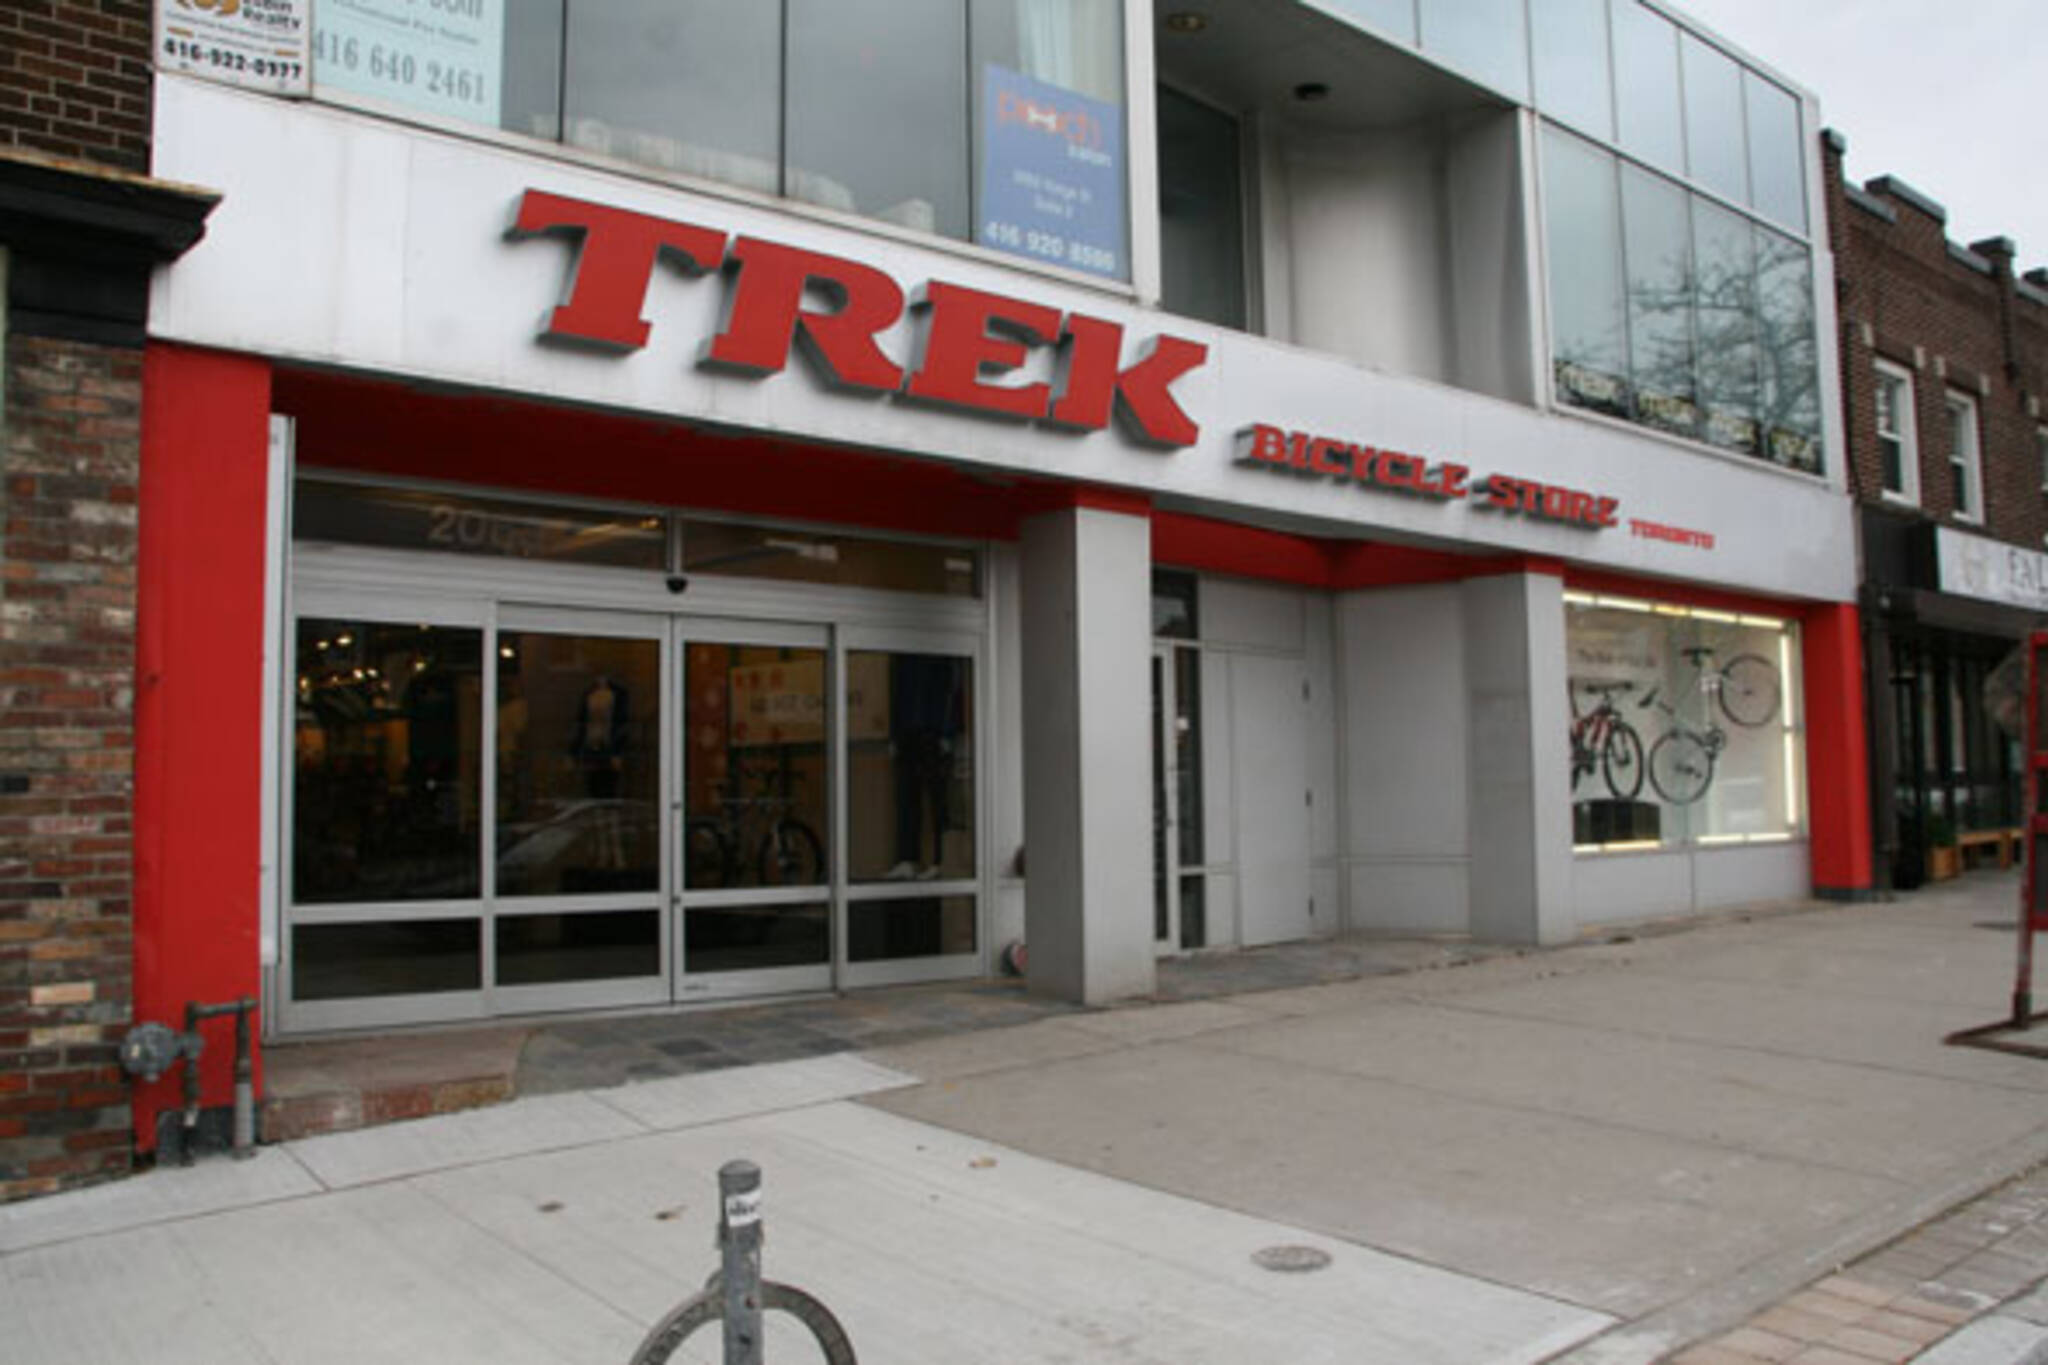 Trek Bicycle Store Toronto